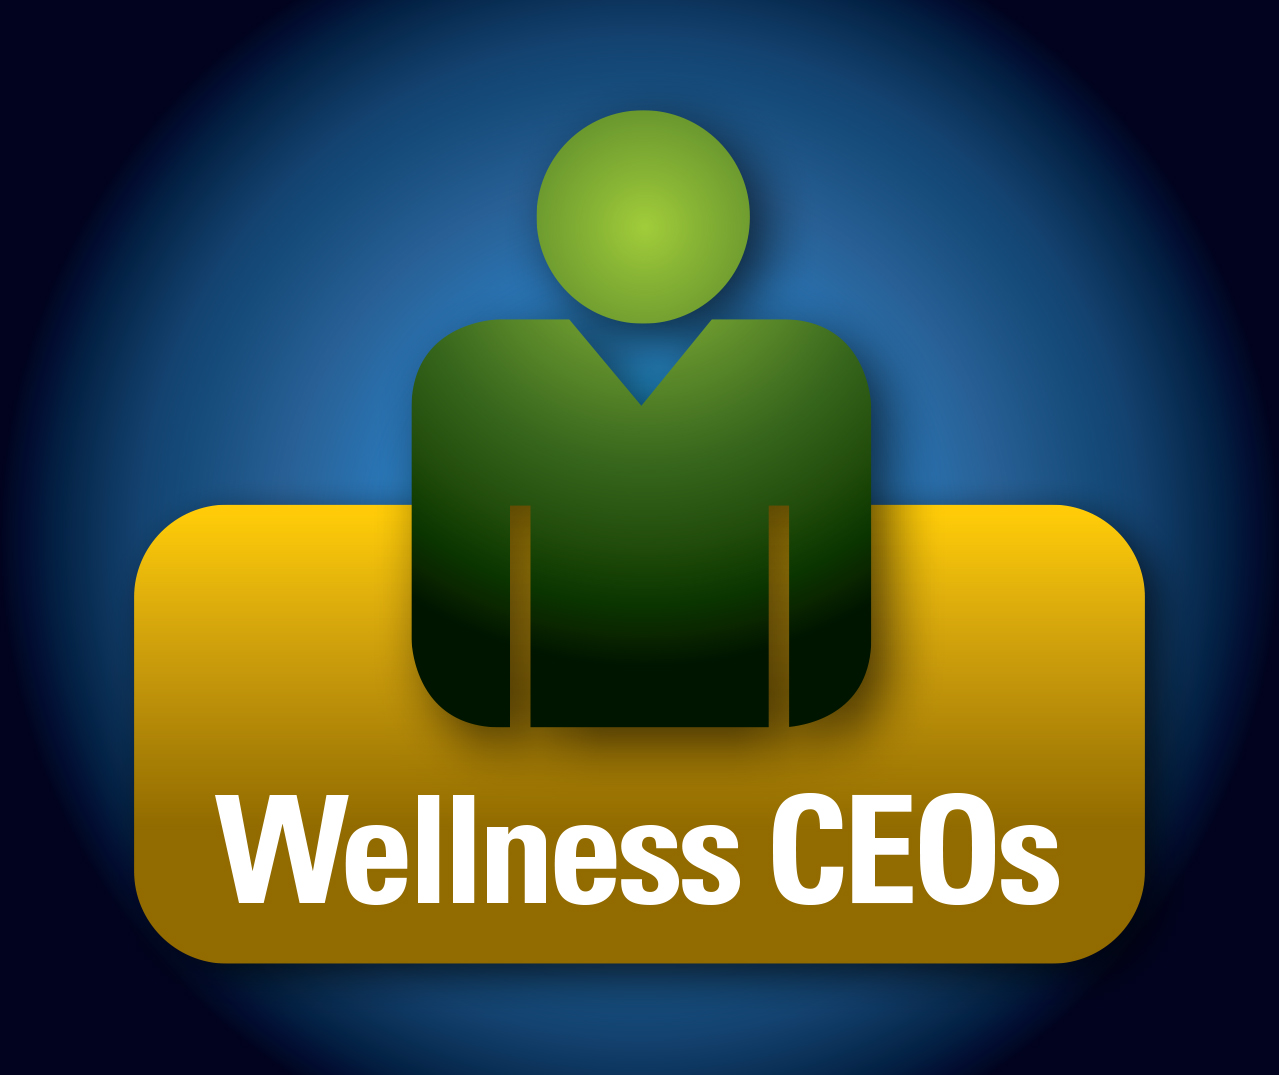 Wellness CEO